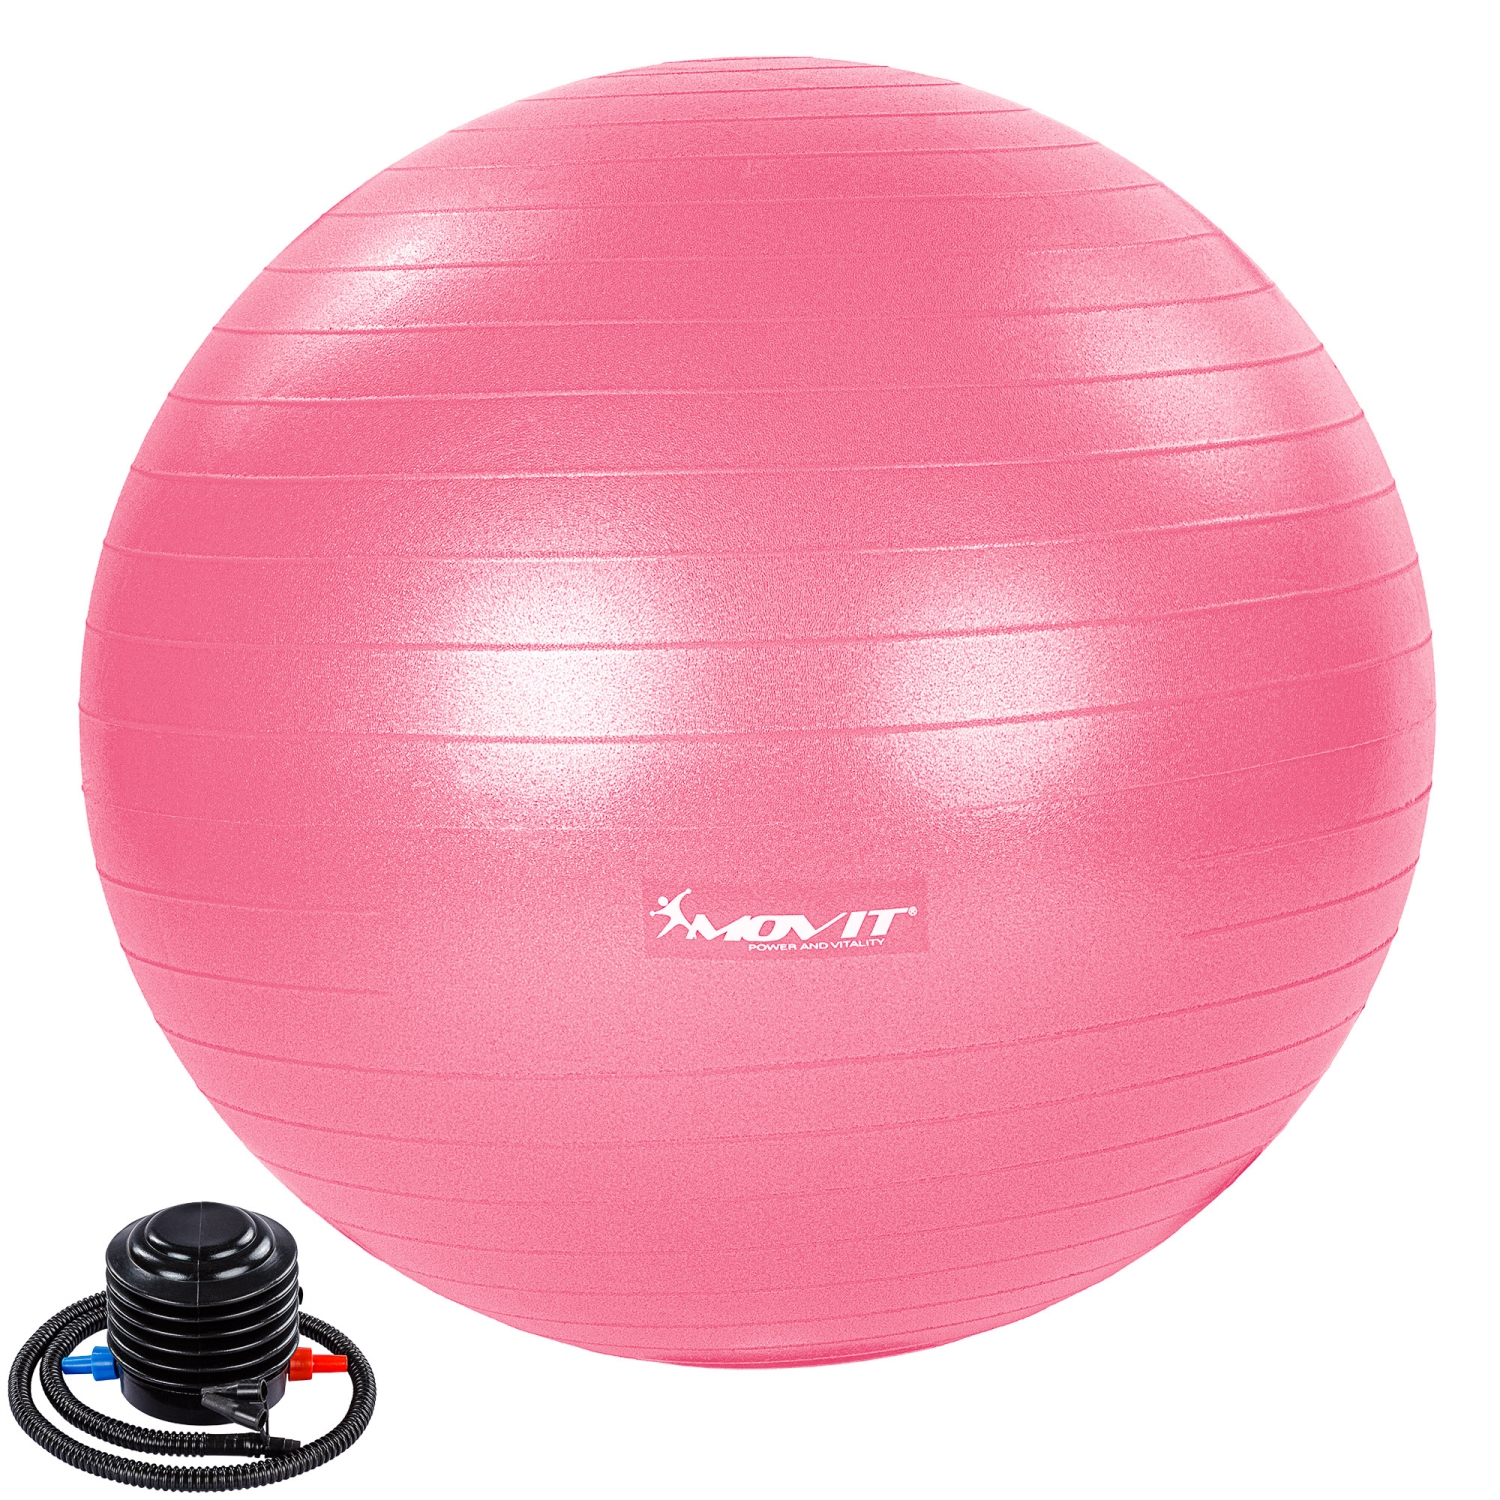 Yoga bal – Pilates bal – Fitness bal – 75 cm – Inclusief pomp – Roze